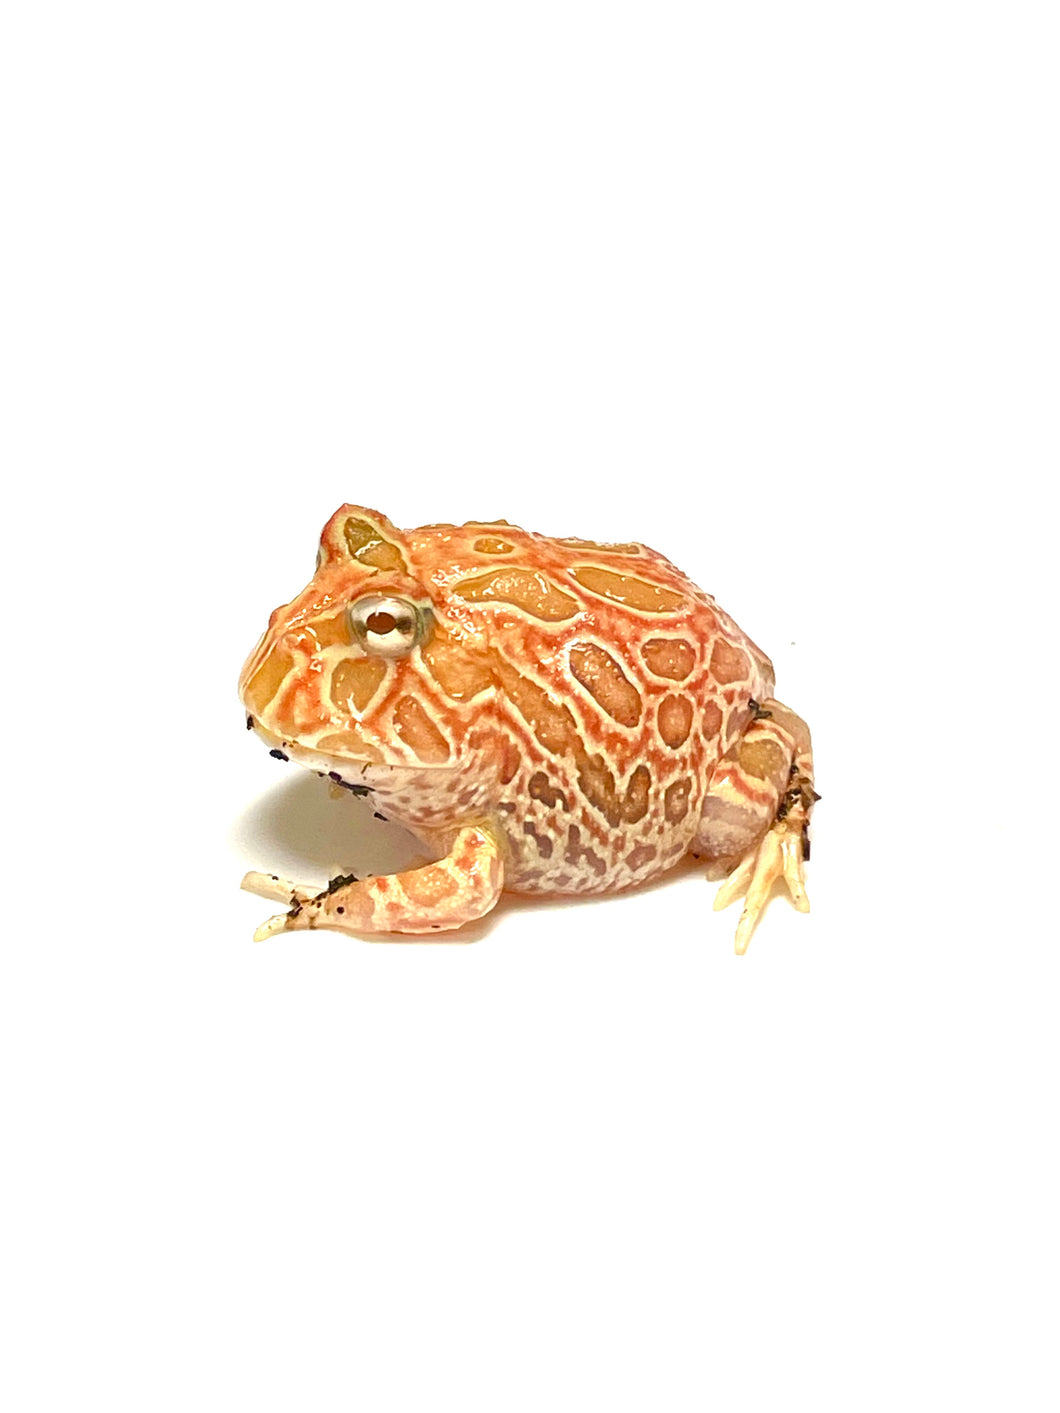 Strawberry Albino Pacman Frog